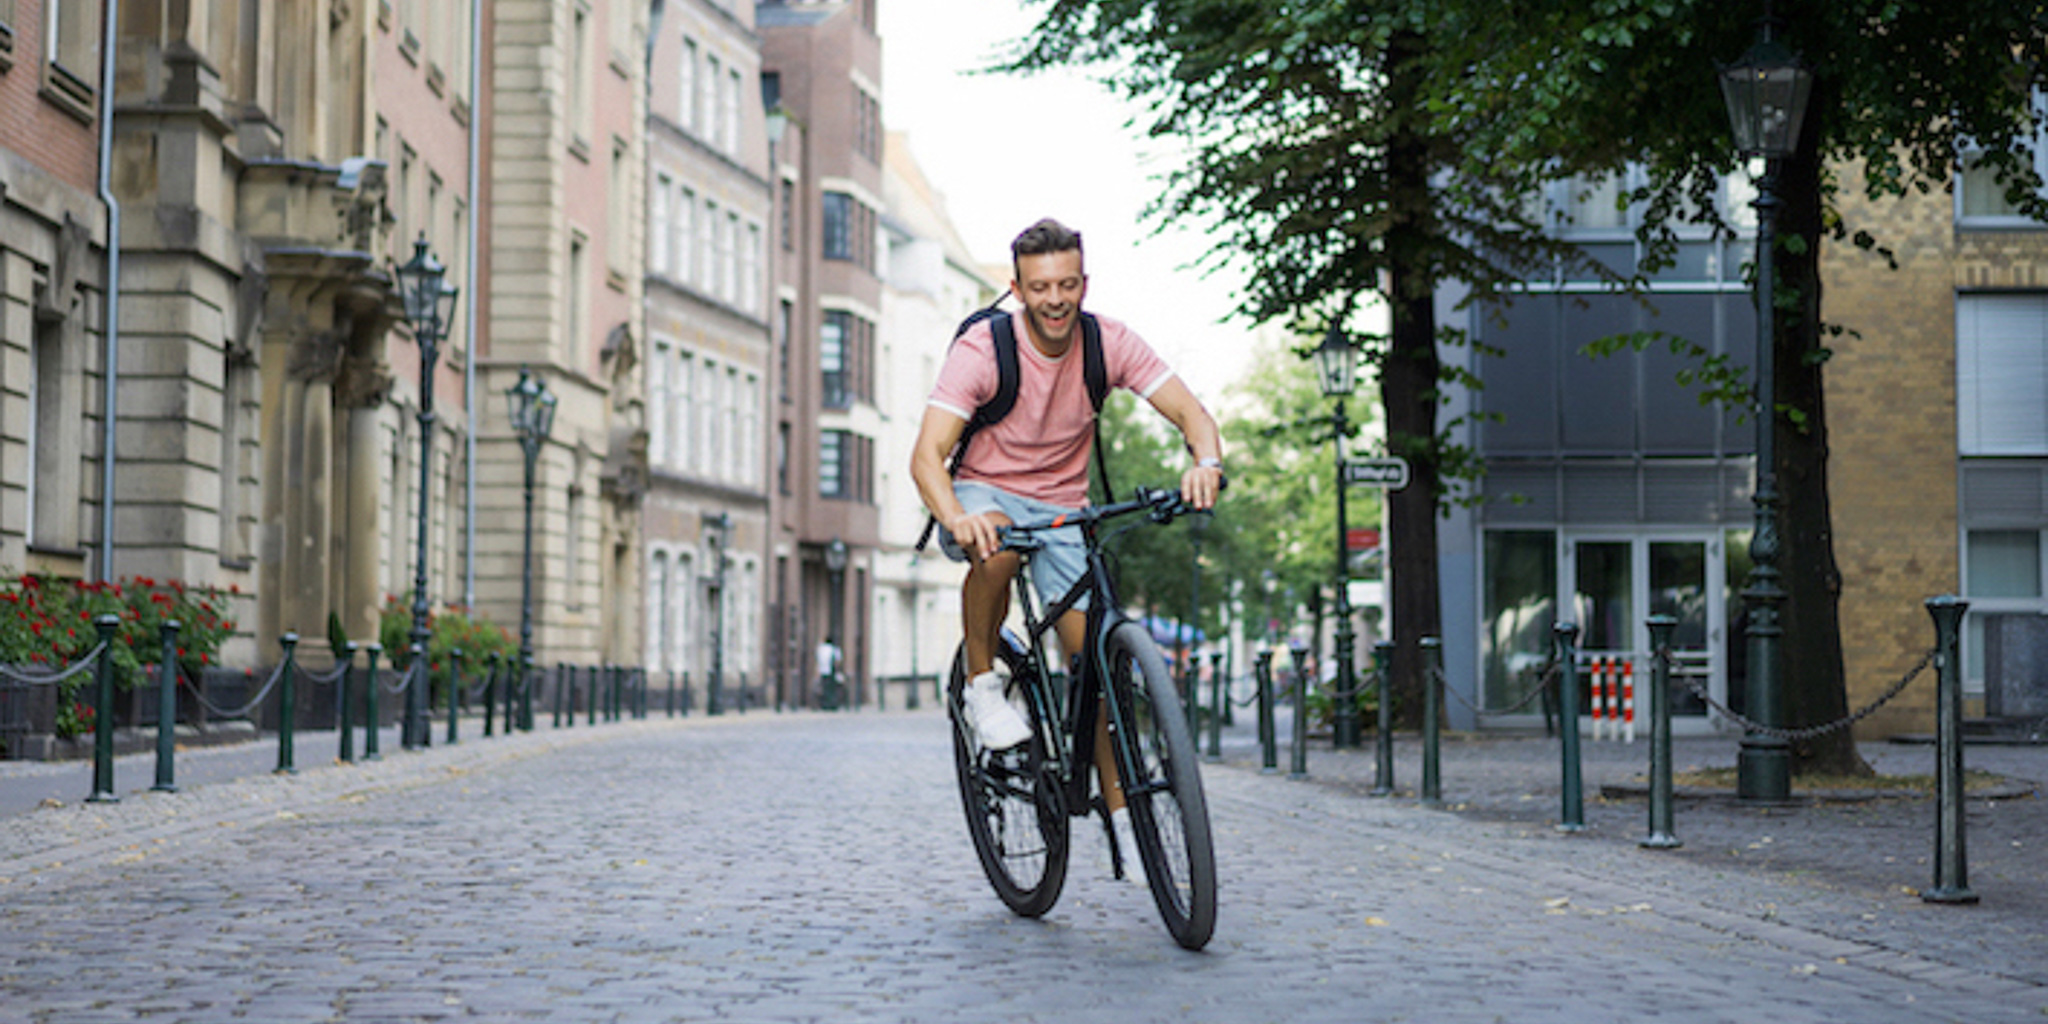 young-sports-man-bicycle-european-city-sports-urban-environments-2-1